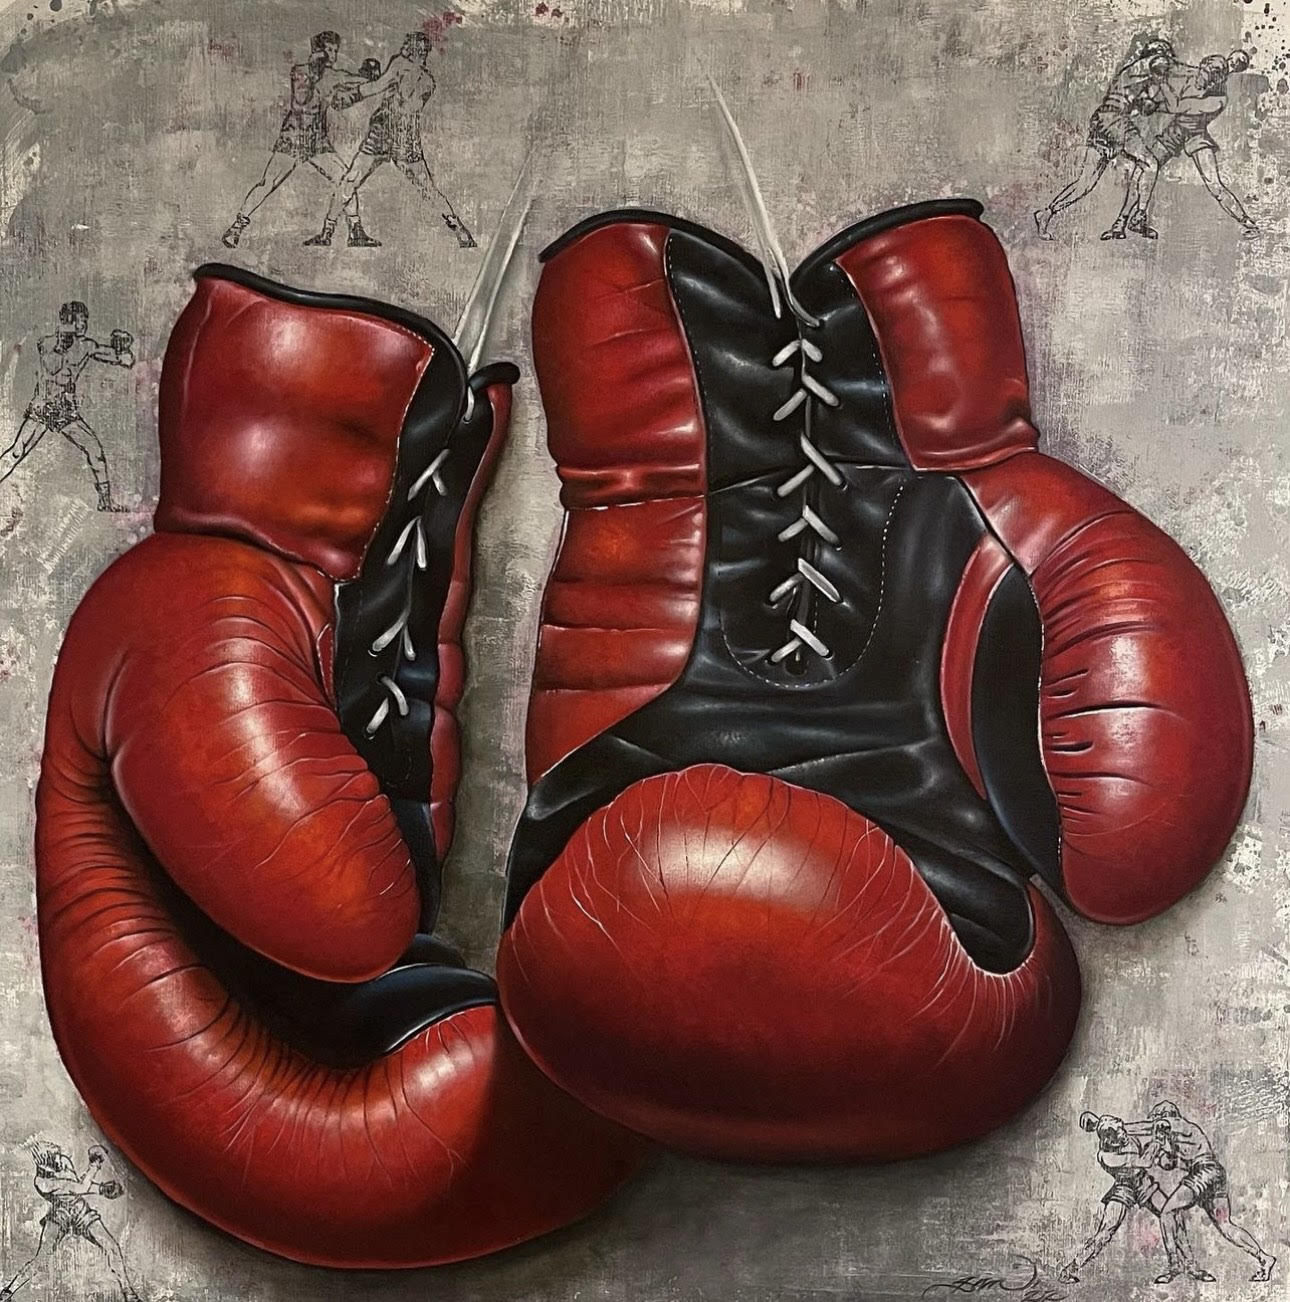 emotion, boxing, Passion, Oil on canvas, painting, Jayaraman Kalidass